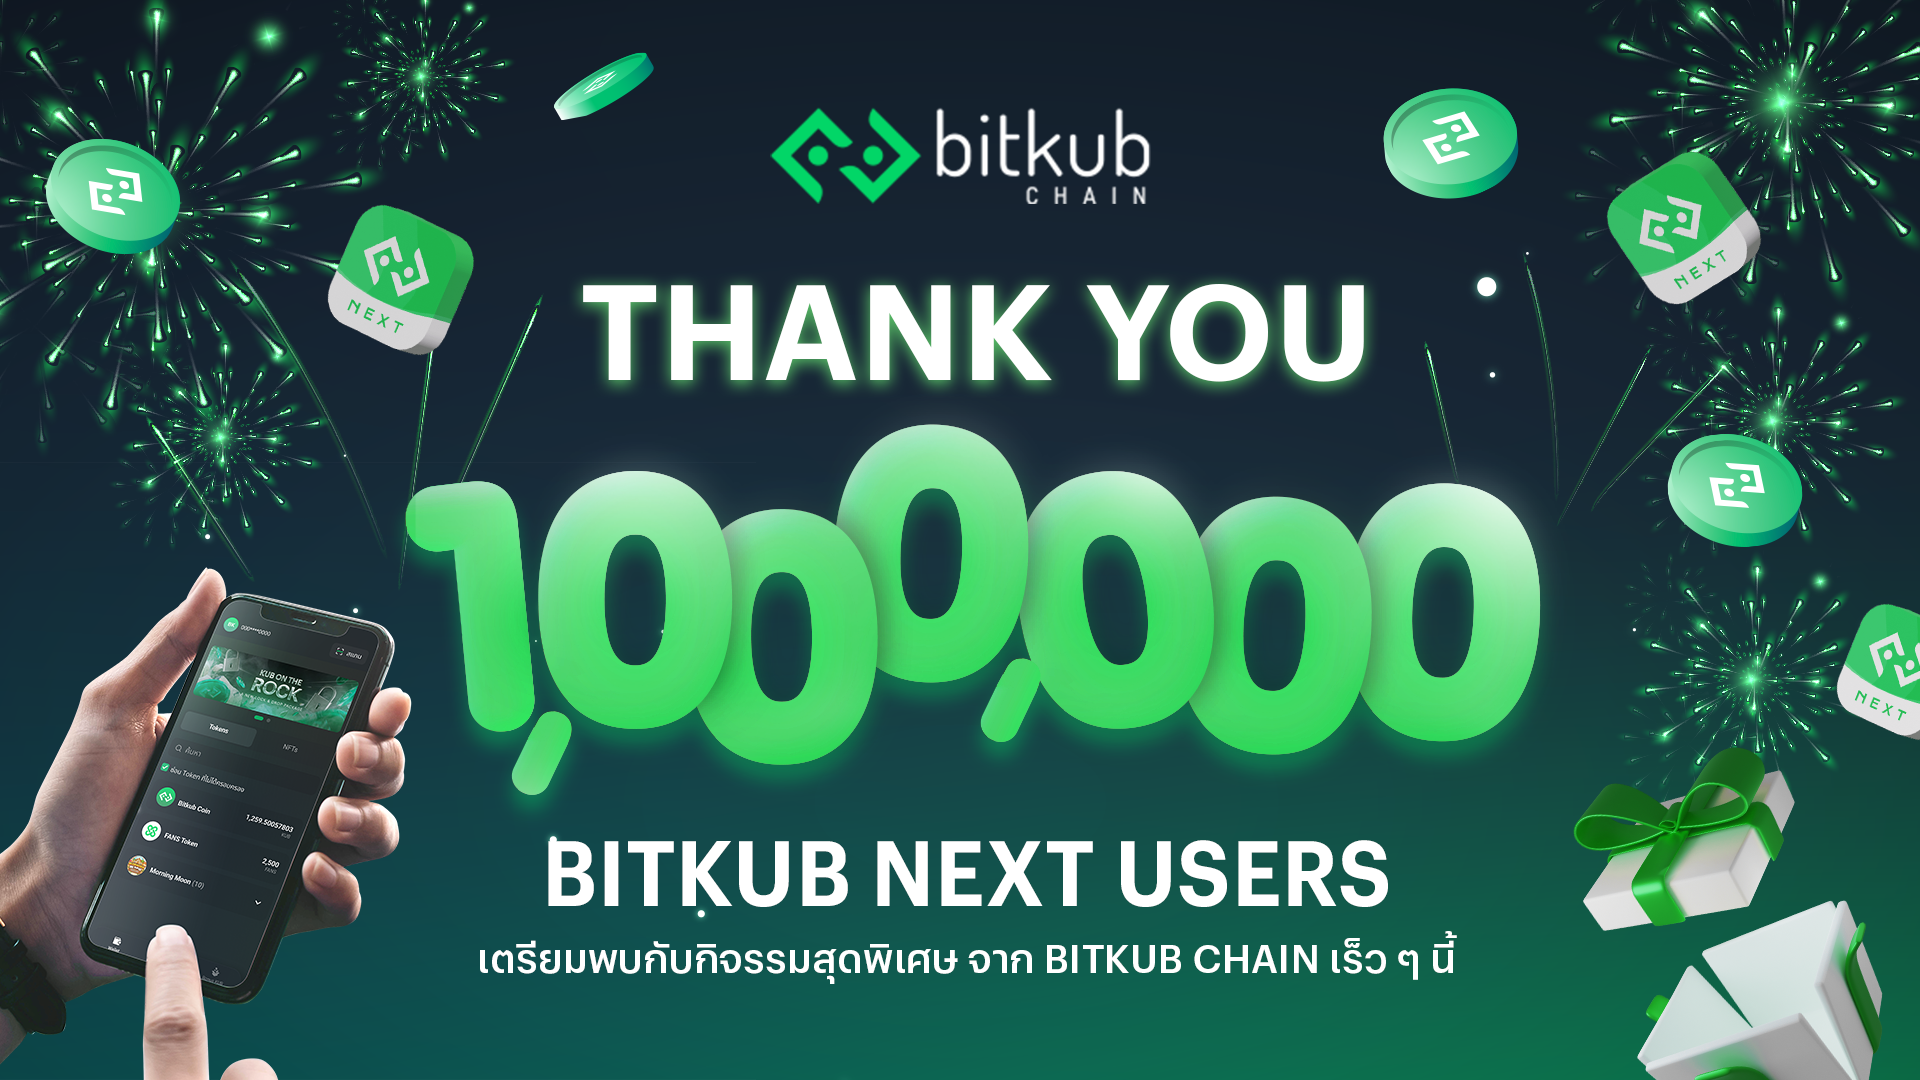 Bitkub NEXT กระเป๋าเก็บสินทรัพย์ดิจิทัลบน Bitkub Chain จากวันแรกสู่ผู้ใช้งาน 1 ล้านราย